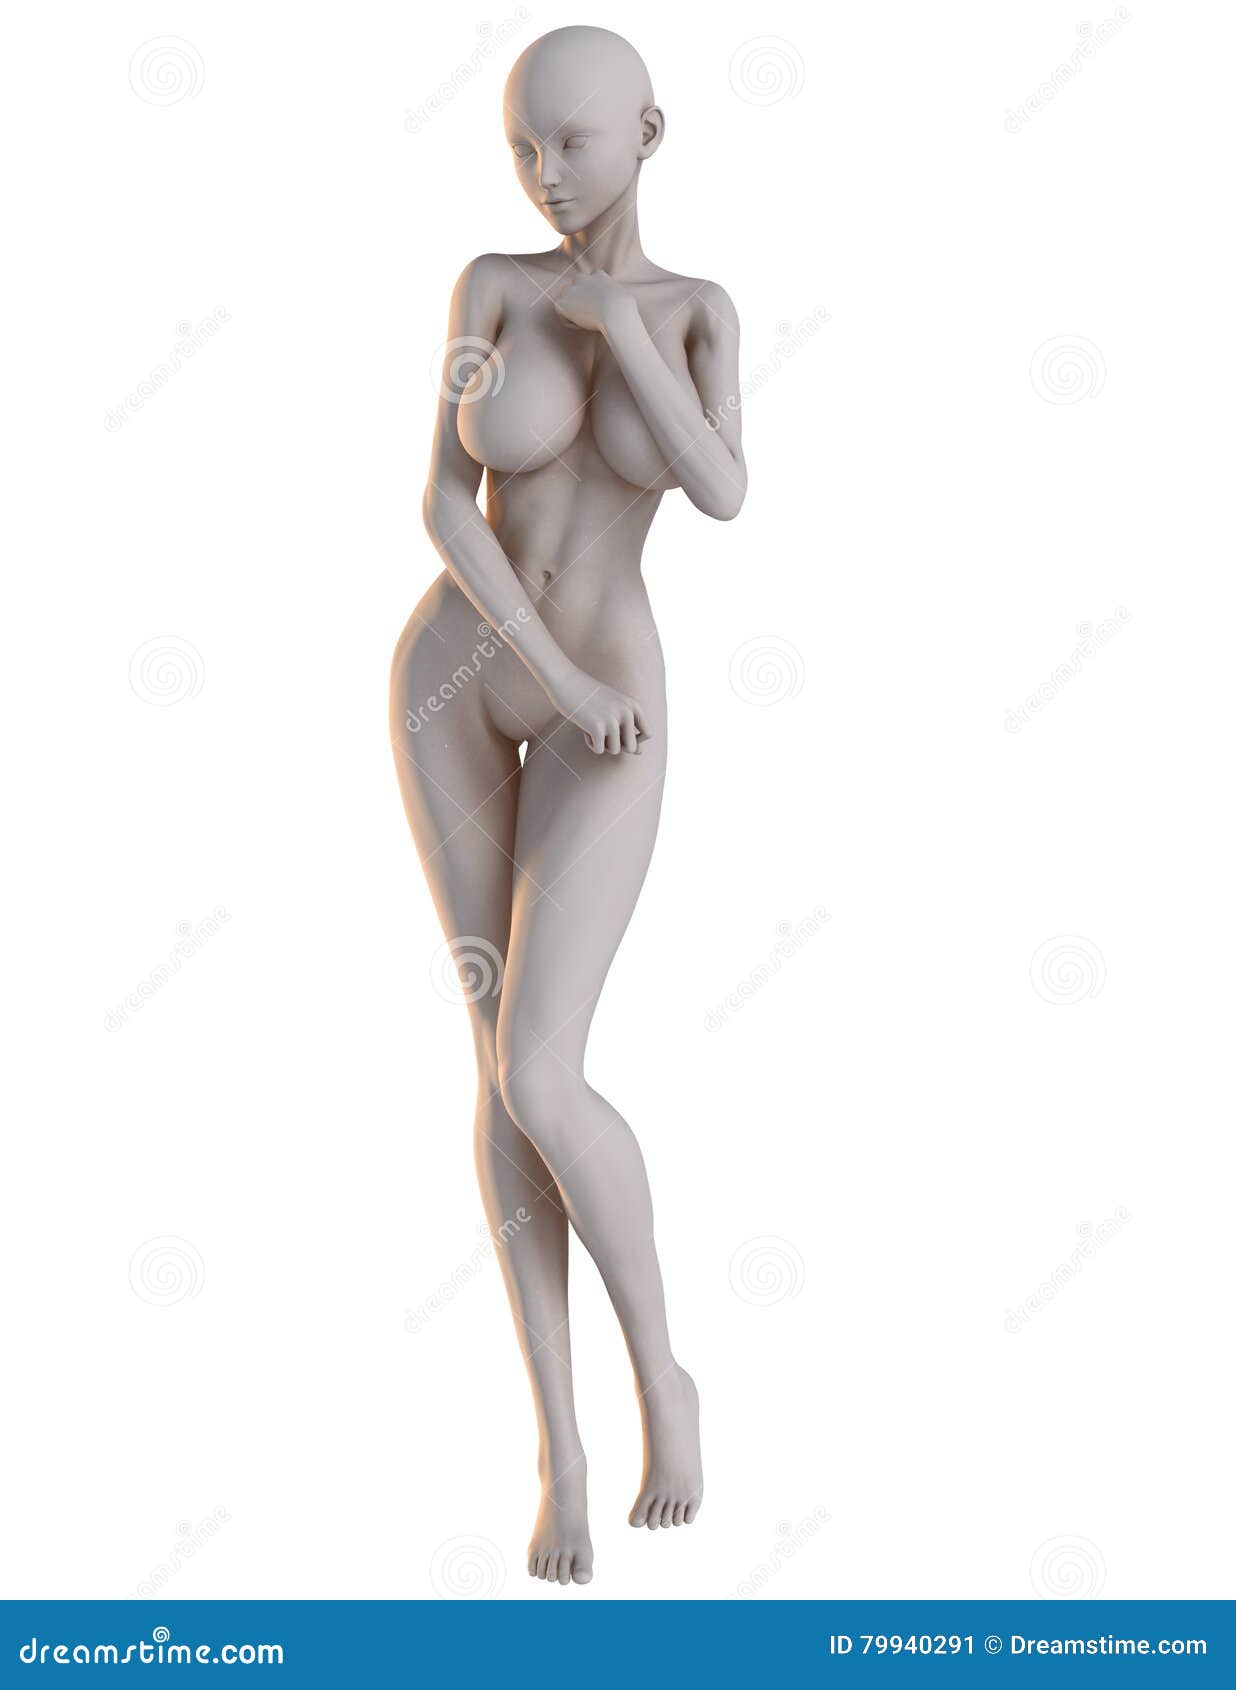 Female Anime Pose Demure stock image. Illustration of resemble - 79940291